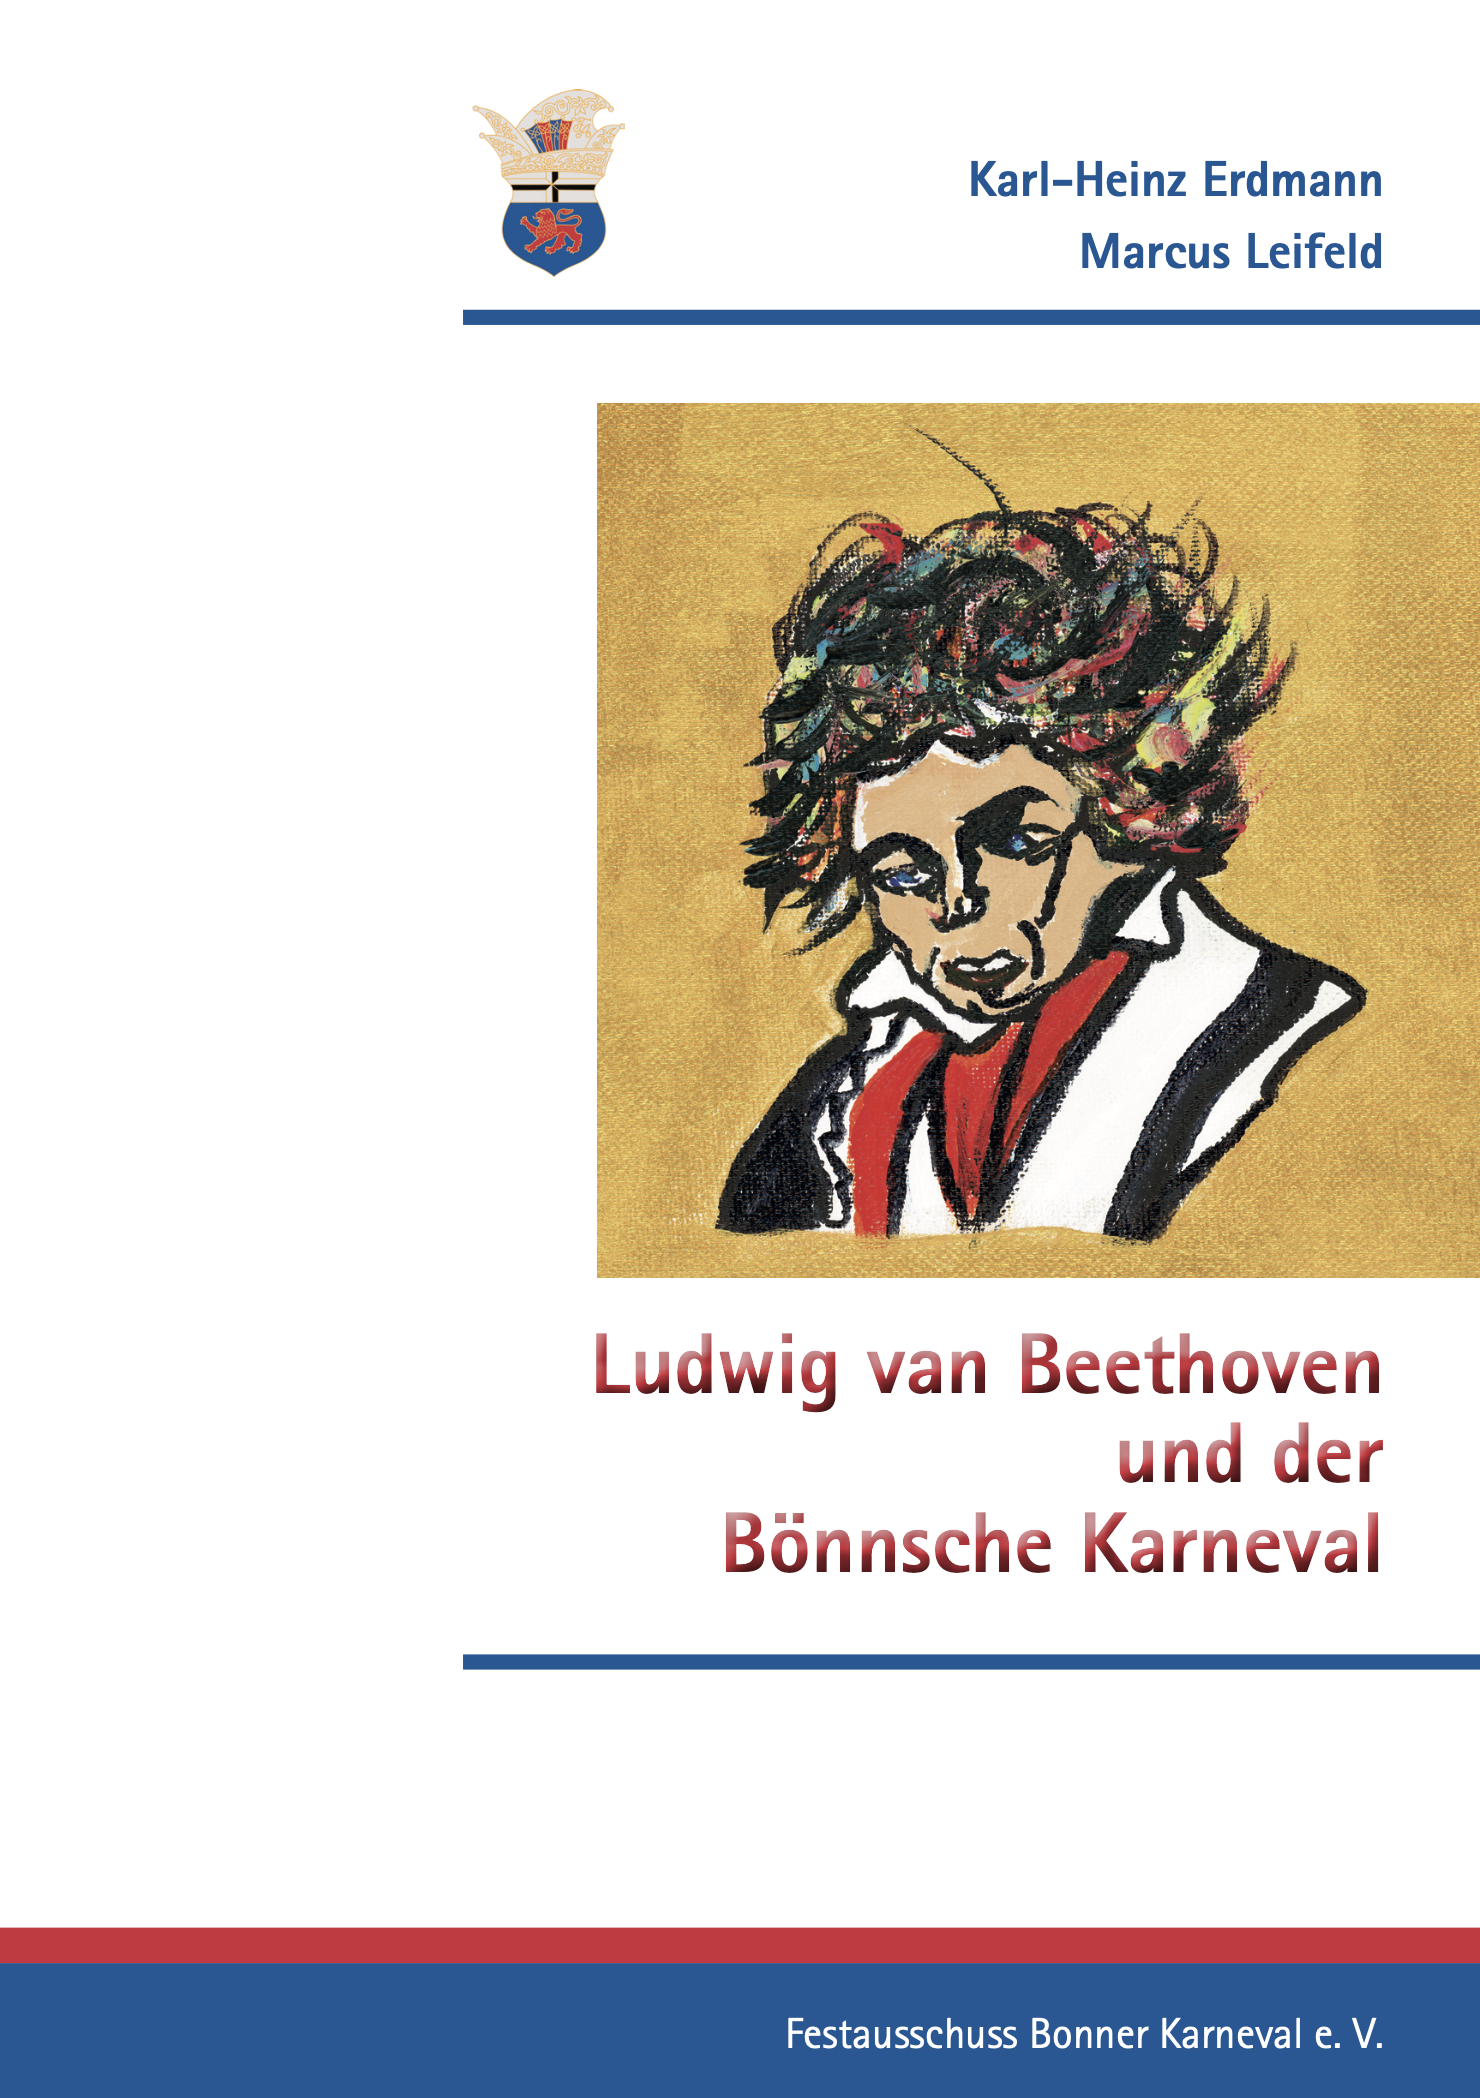 Beethoven und Karneval